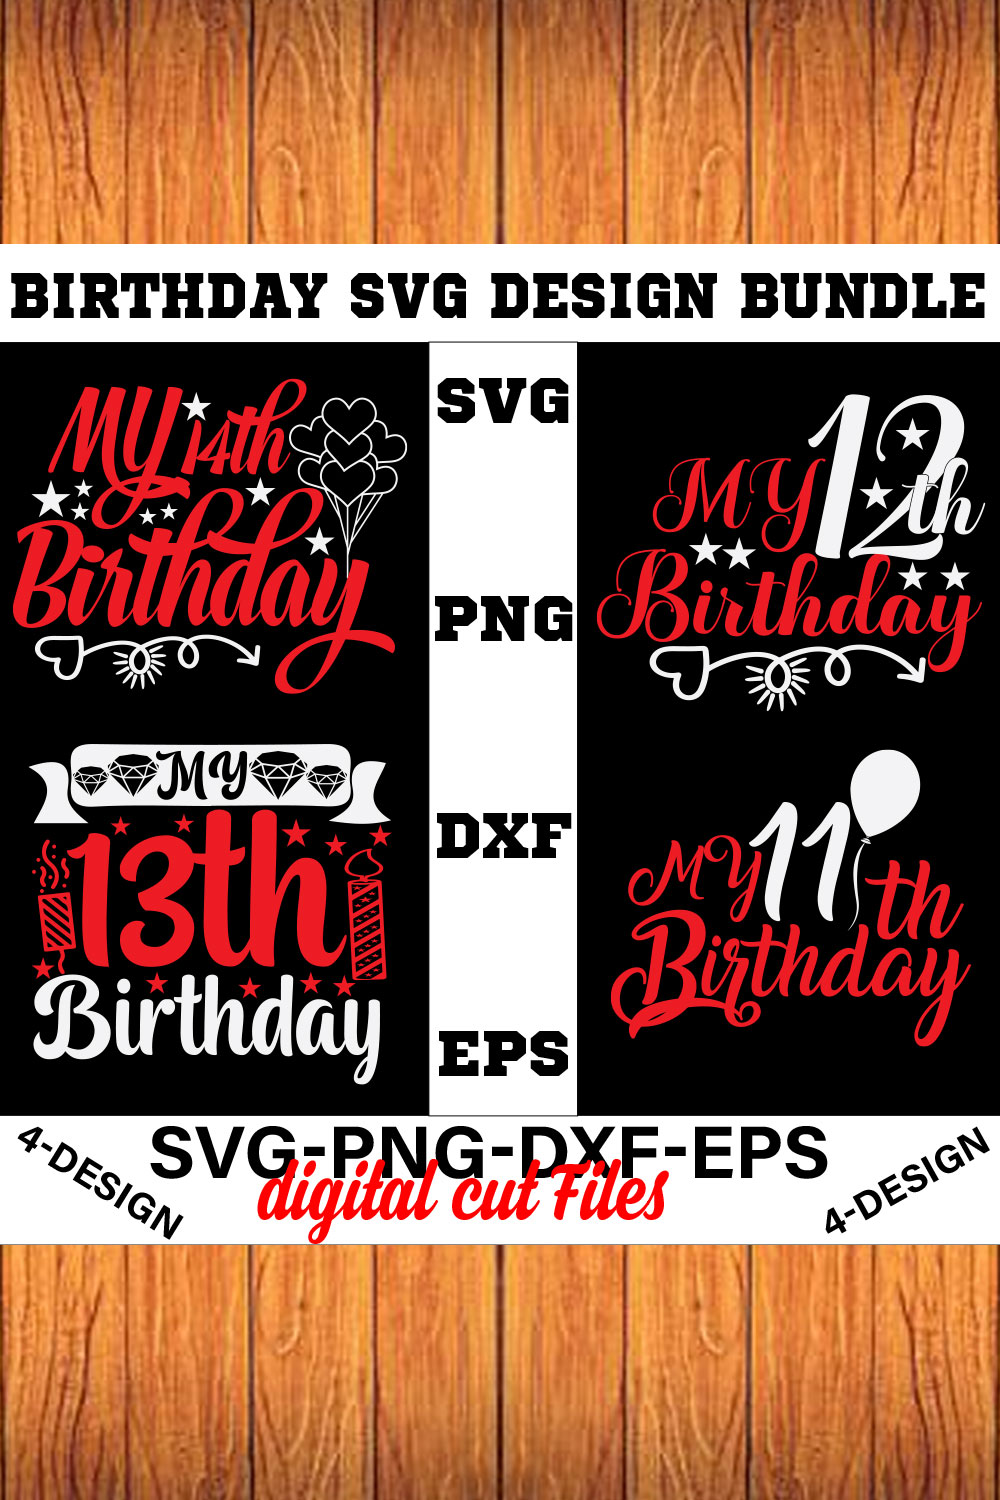 birthday svg design bundle Happy birthday svg bundle hand lettered birthday svg birthday party svg Volume-27 pinterest preview image.